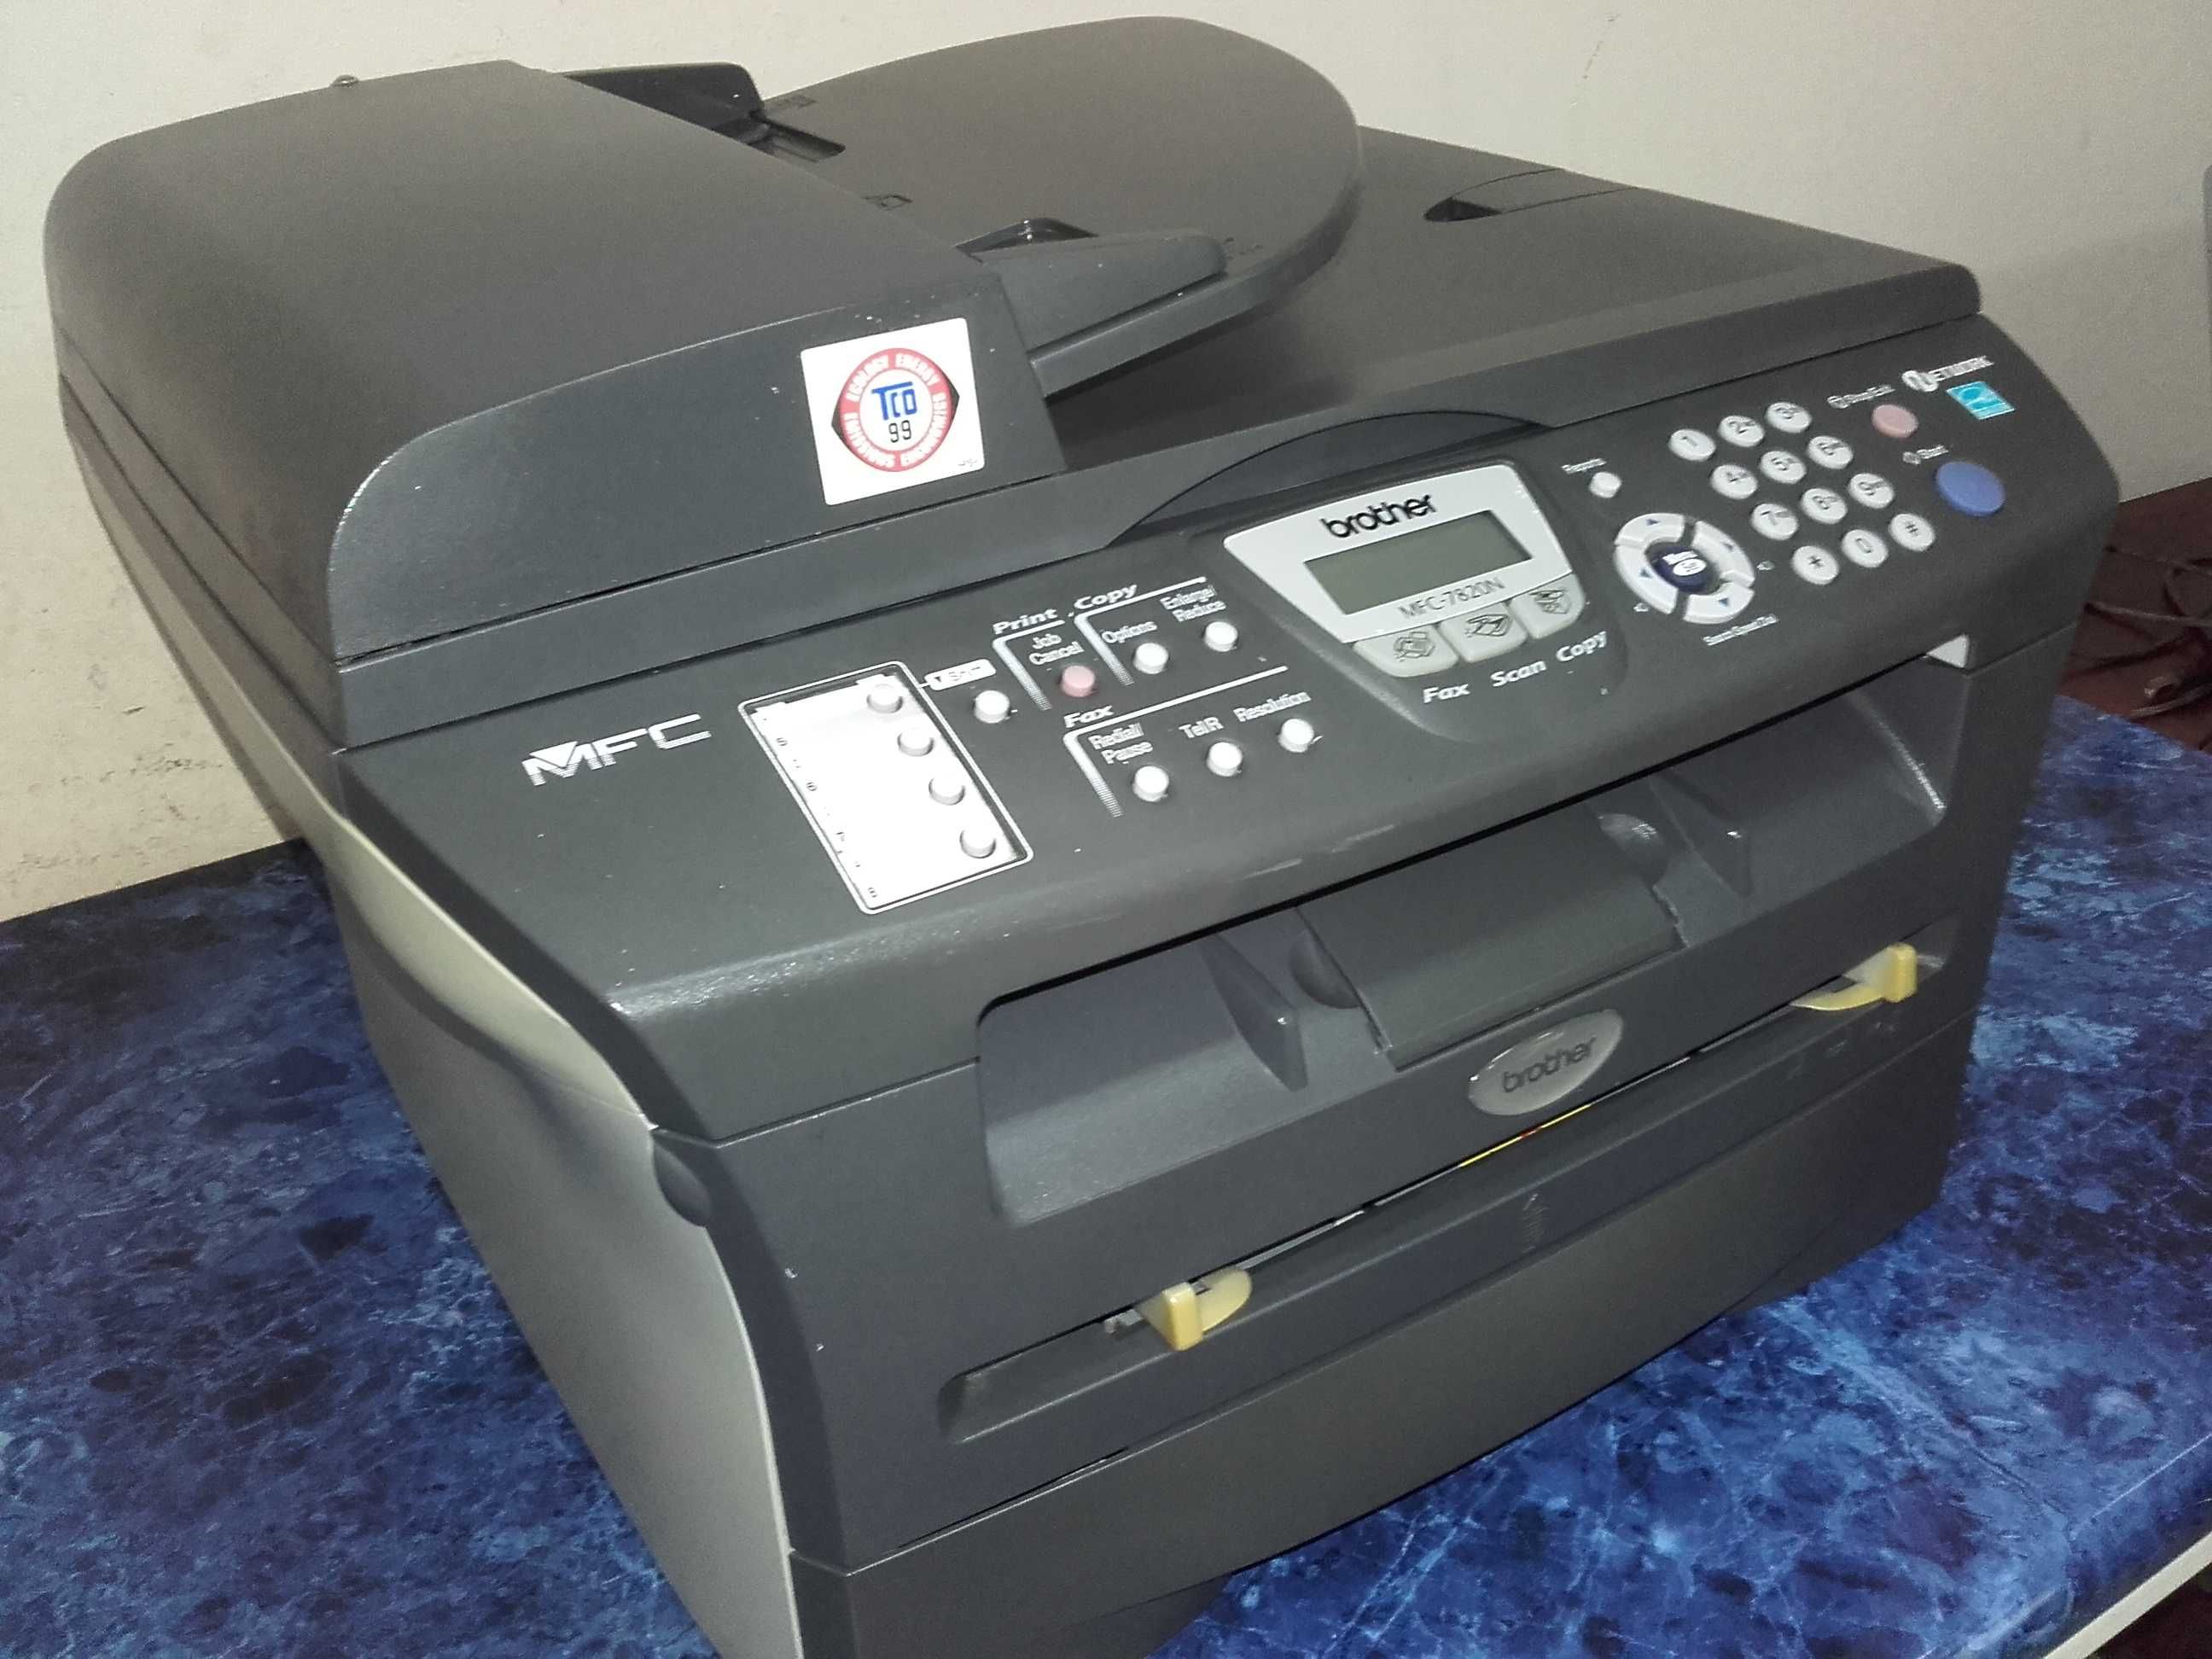 Отличен!!! Лазерен принтер, скенер и копир 3 в 1  Brother MFC 7820N